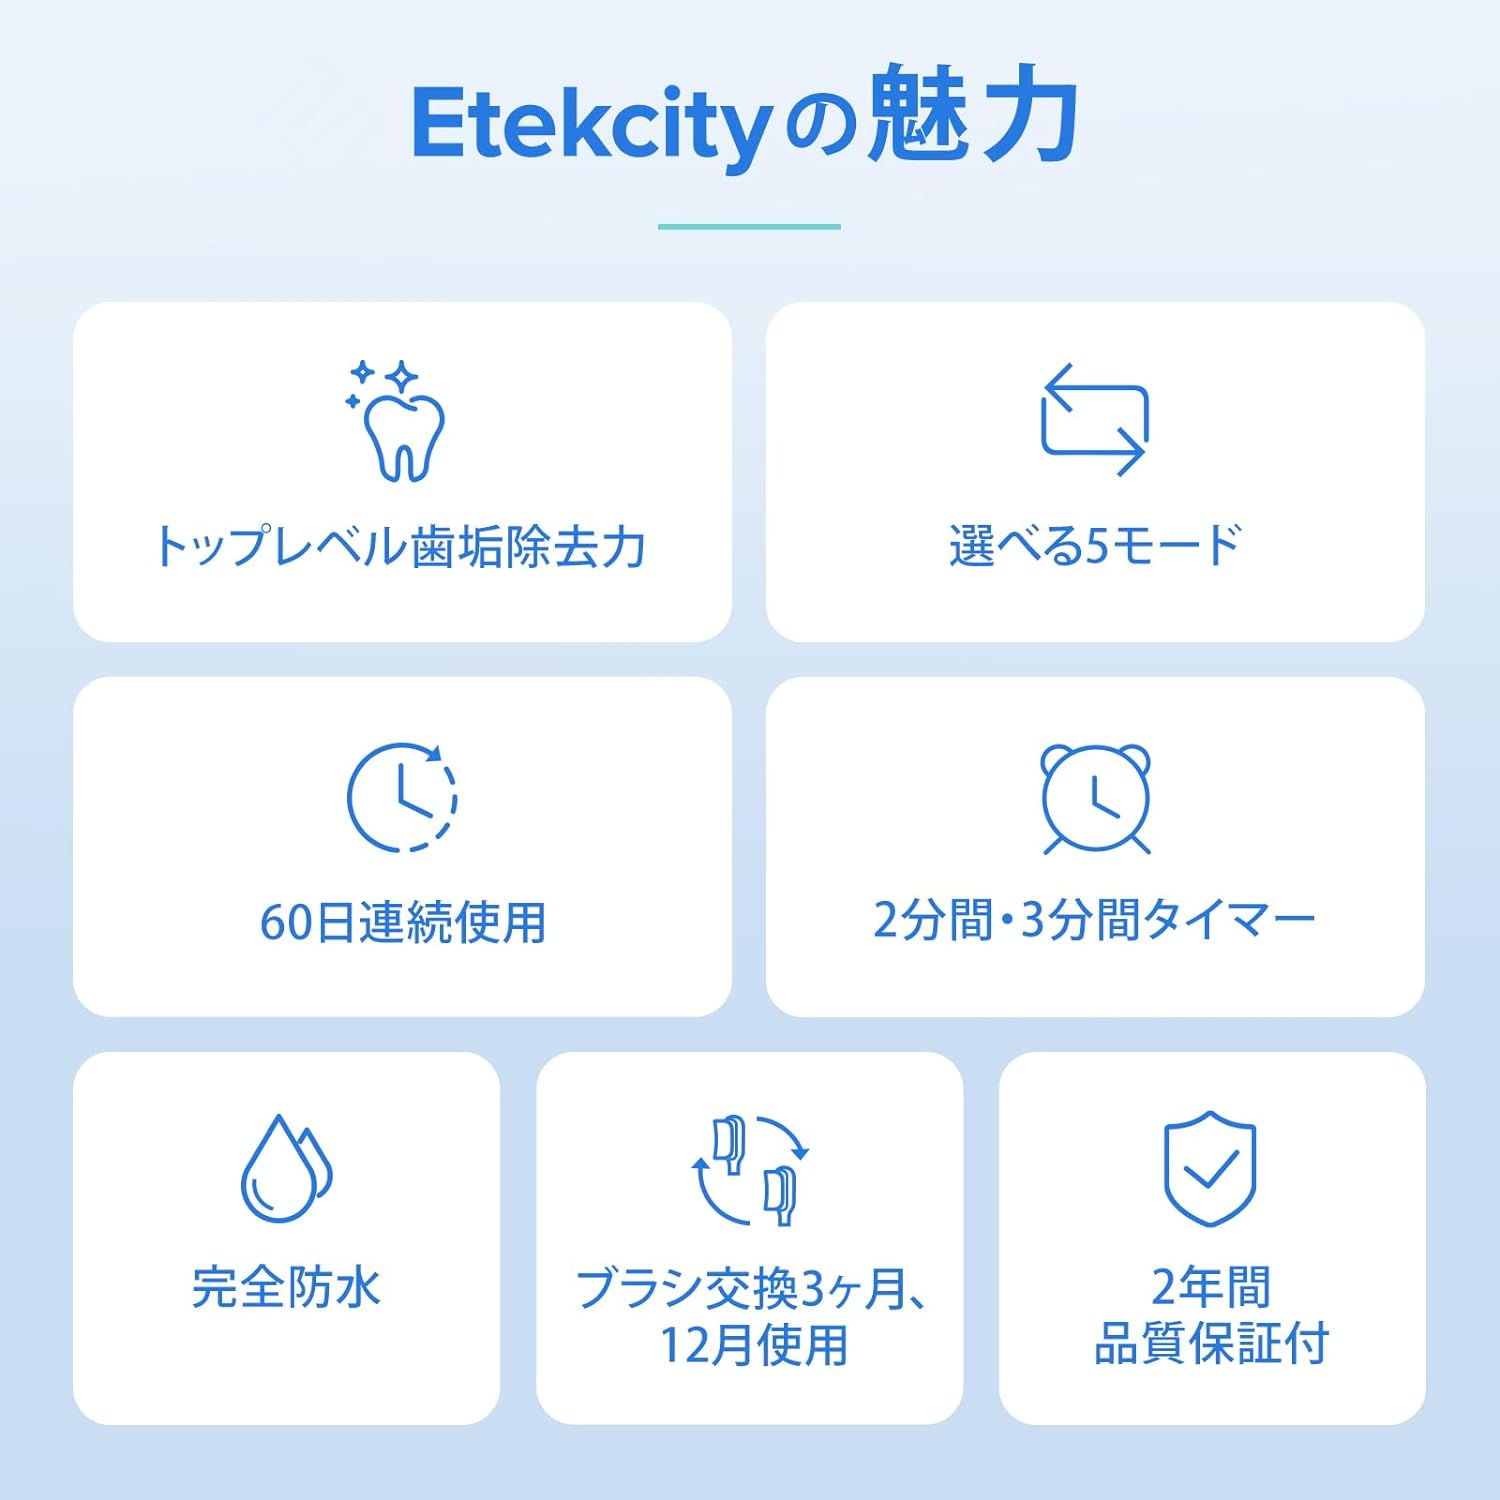 Etekcity 電動歯ブラシ ETB-C011